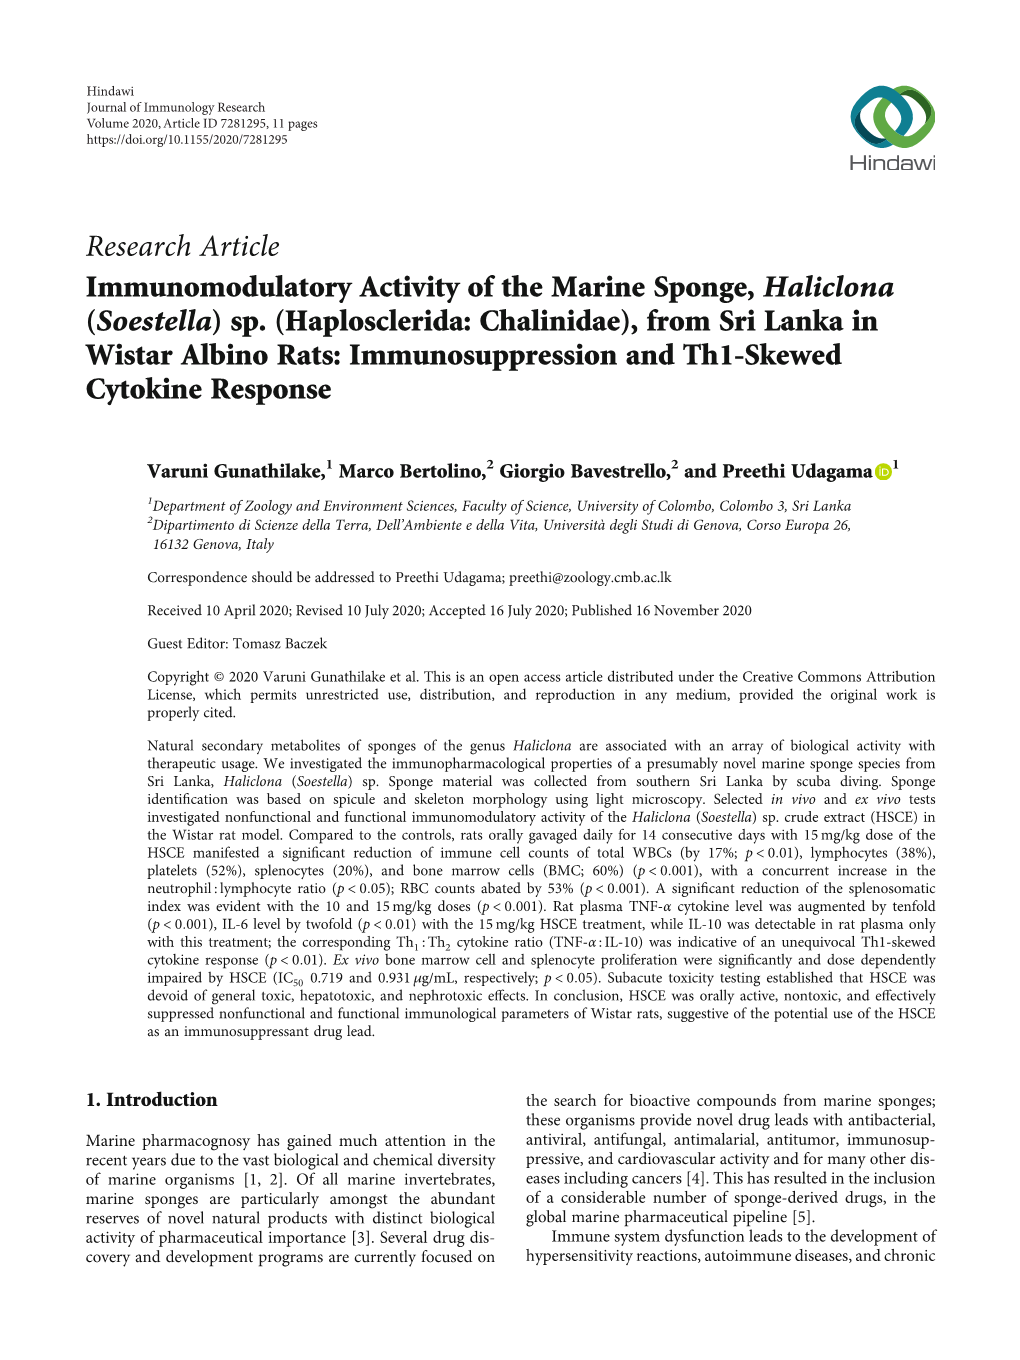 Immunomodulatory Activity of the Marine Sponge, Haliclona (Soestella) Sp